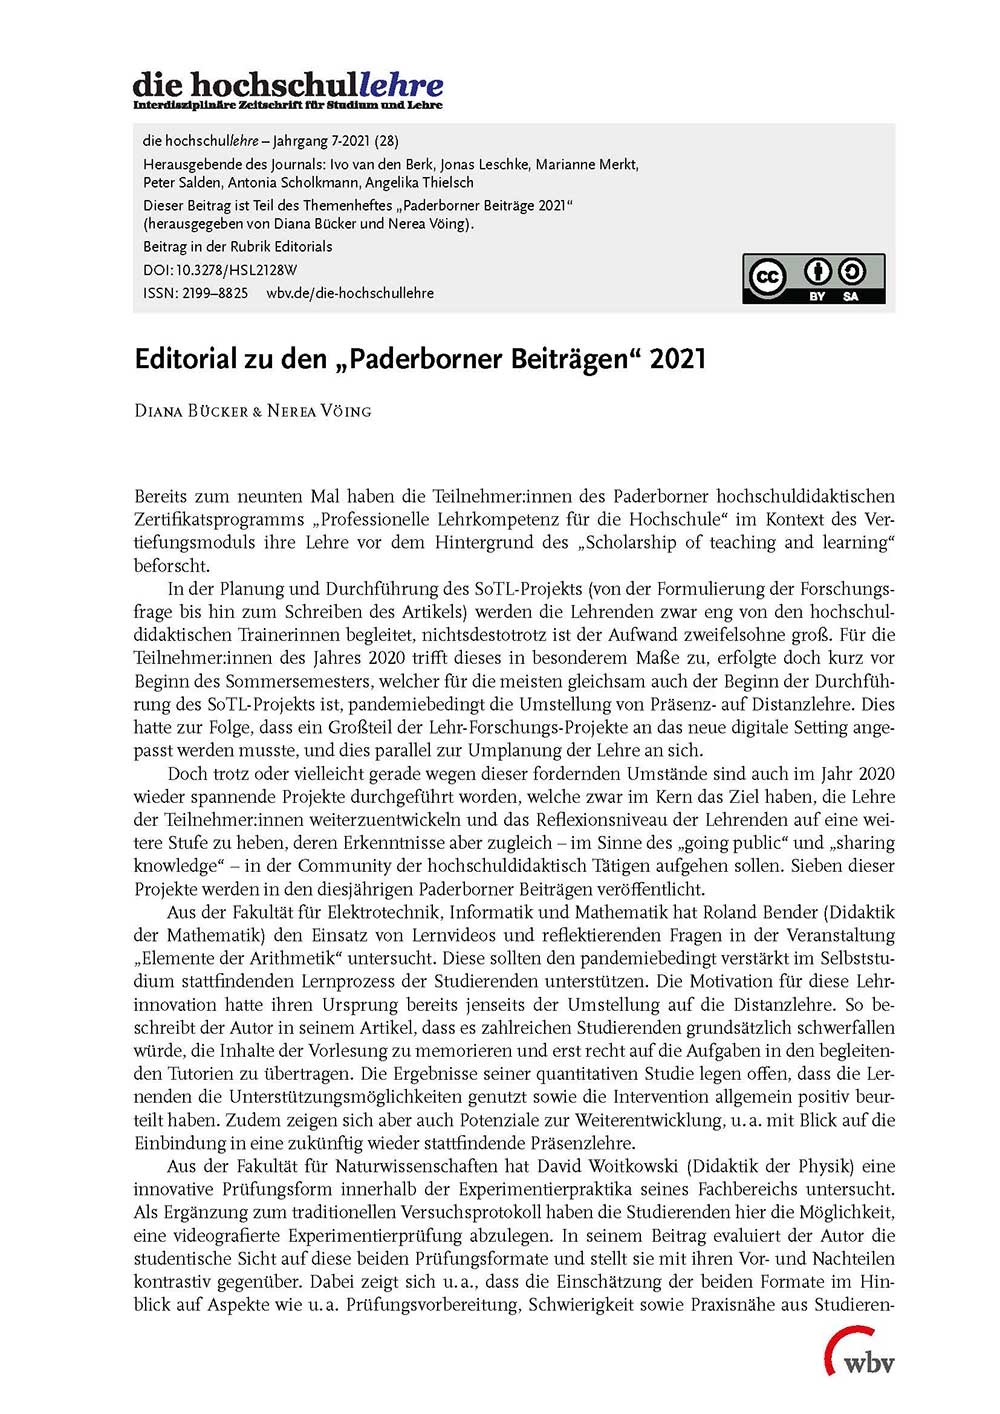 Editorial zu den "Paderborner Beiträgen" 2021